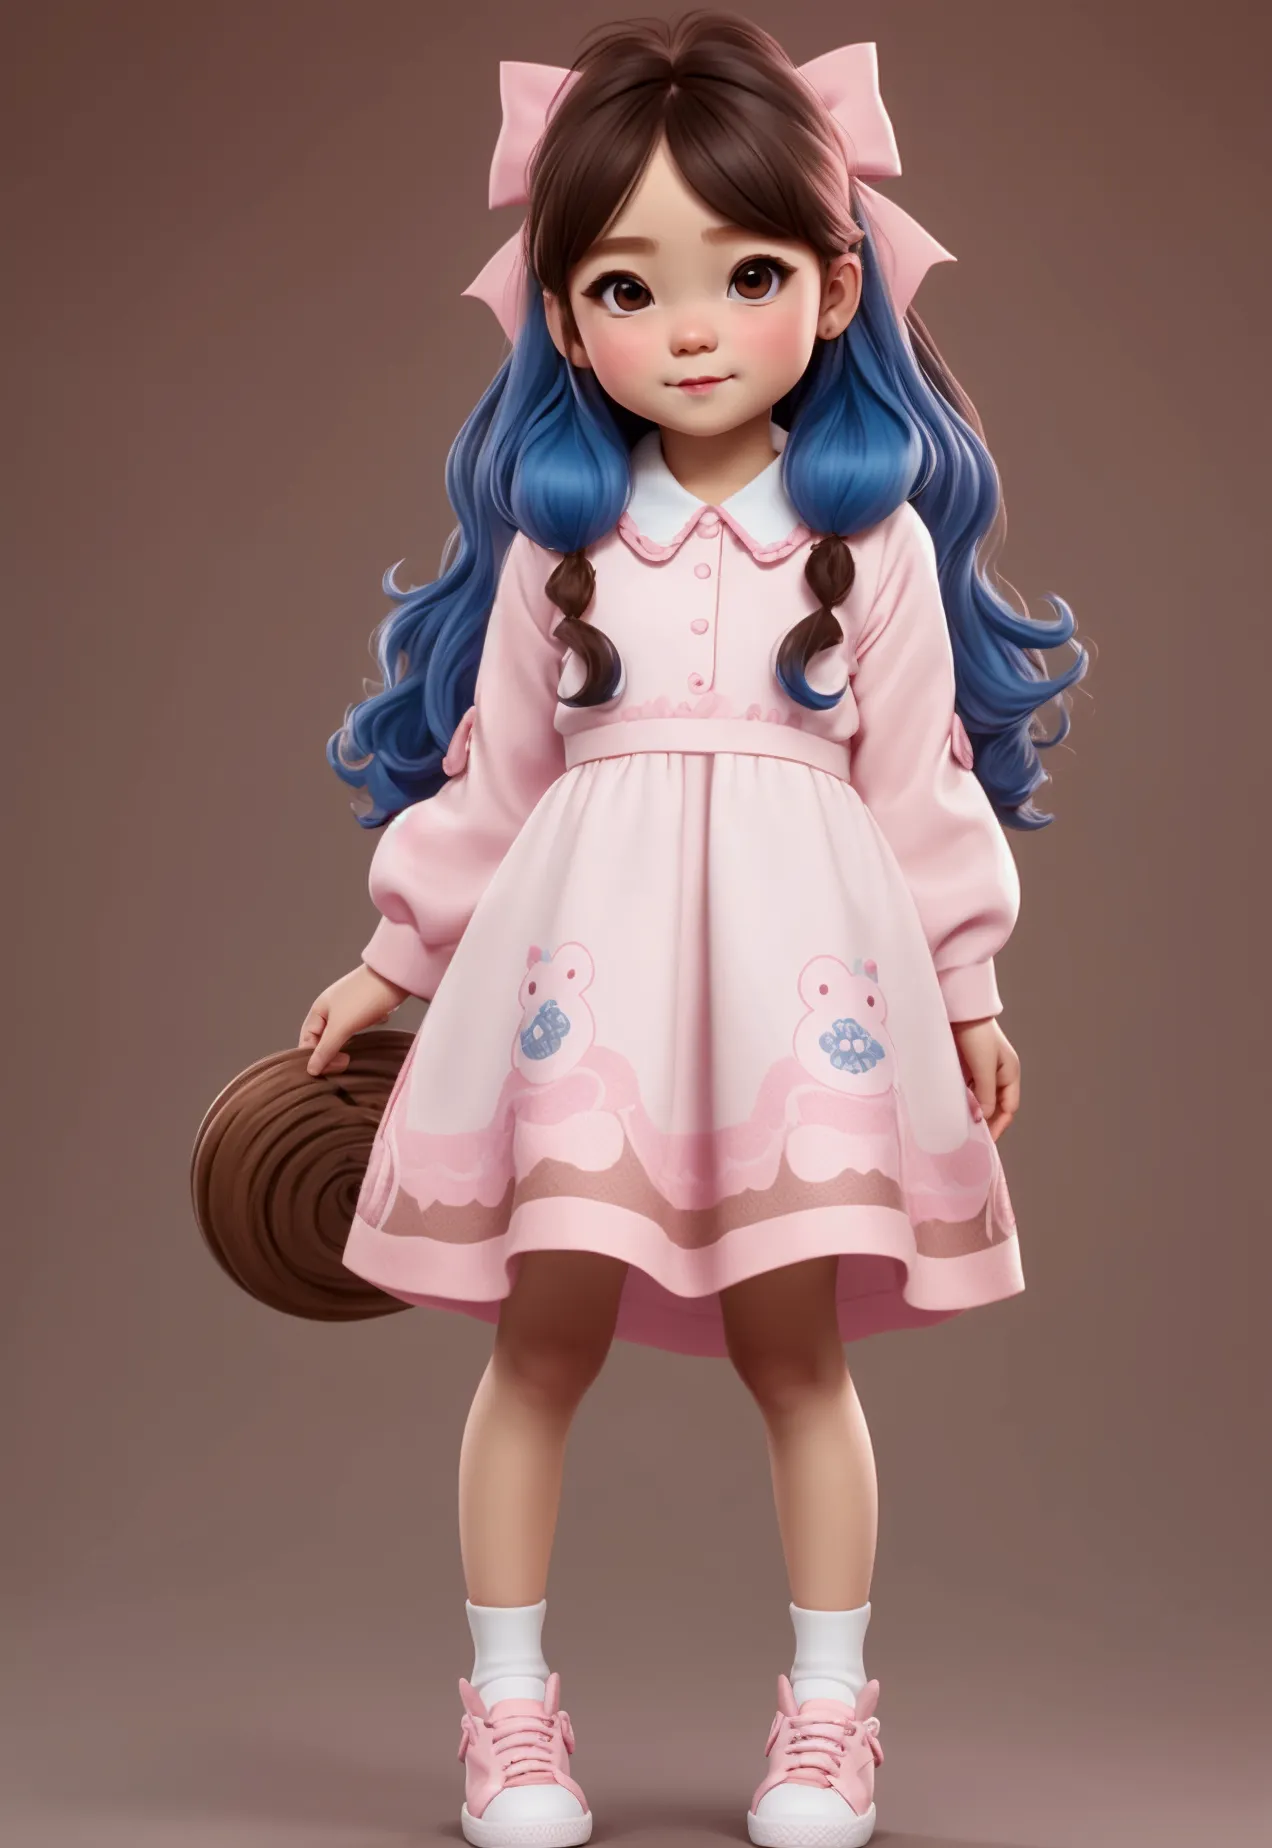 chibi baby 8k, highly detailed, beautiful girl, baby, chibi, , cover art, blue hair bow, brown long hair pink sleeve dress, whit...